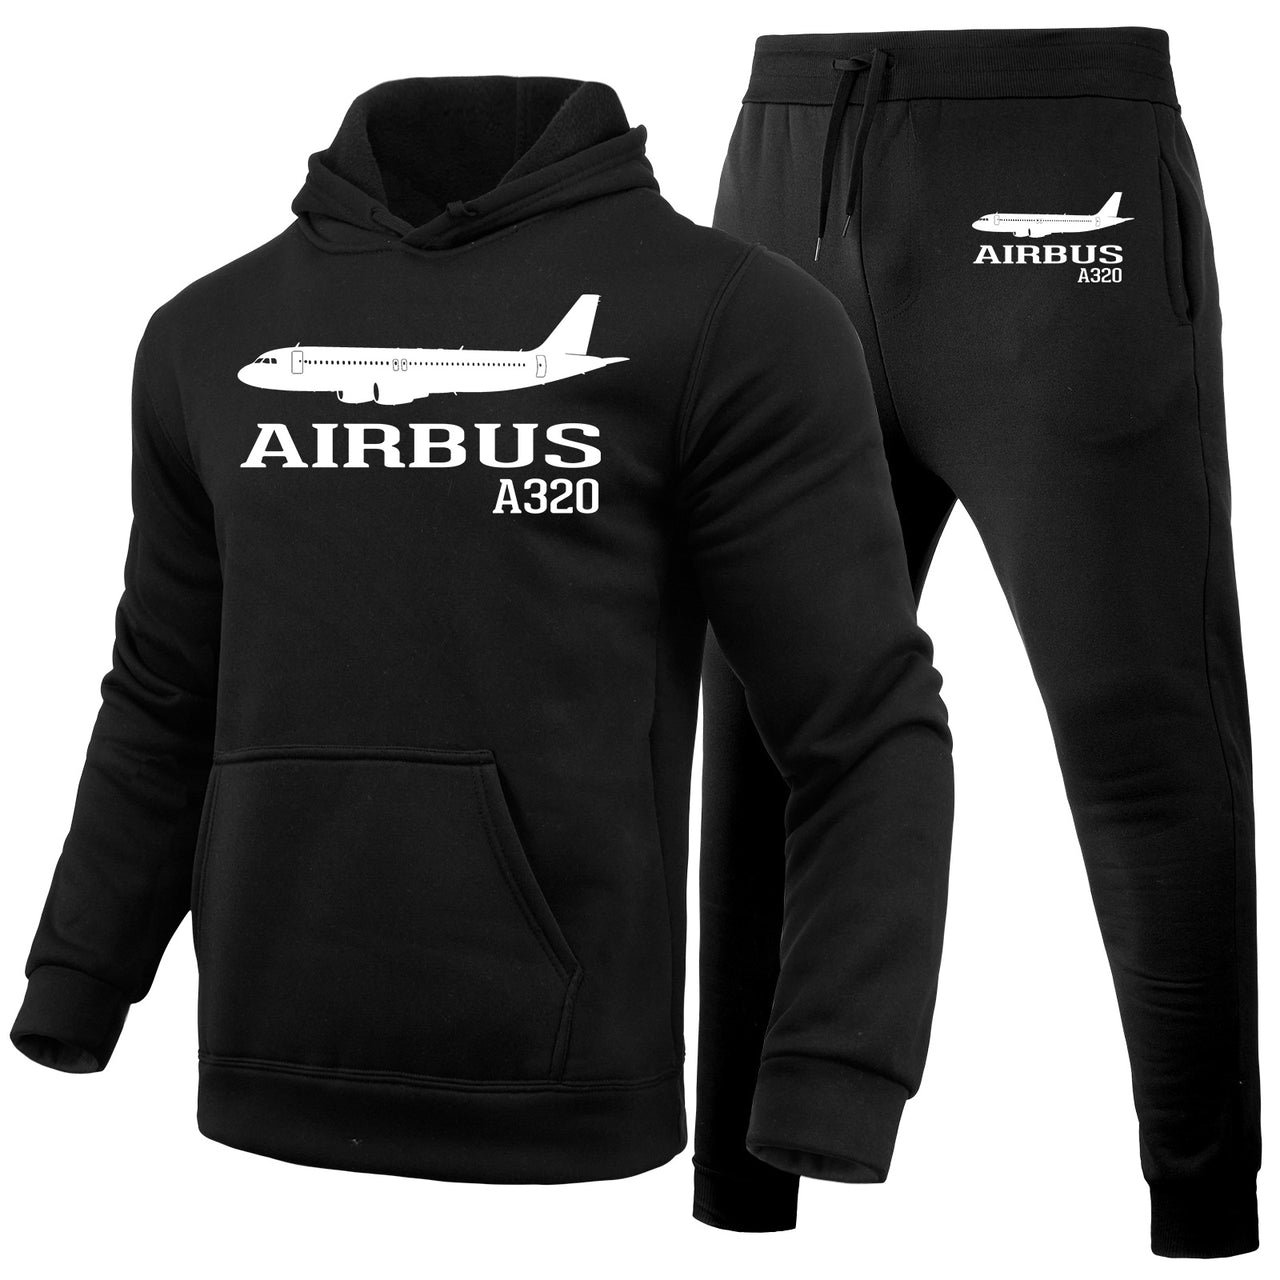 Airbus A320 Printed Designed Hoodies & Sweatpants Set